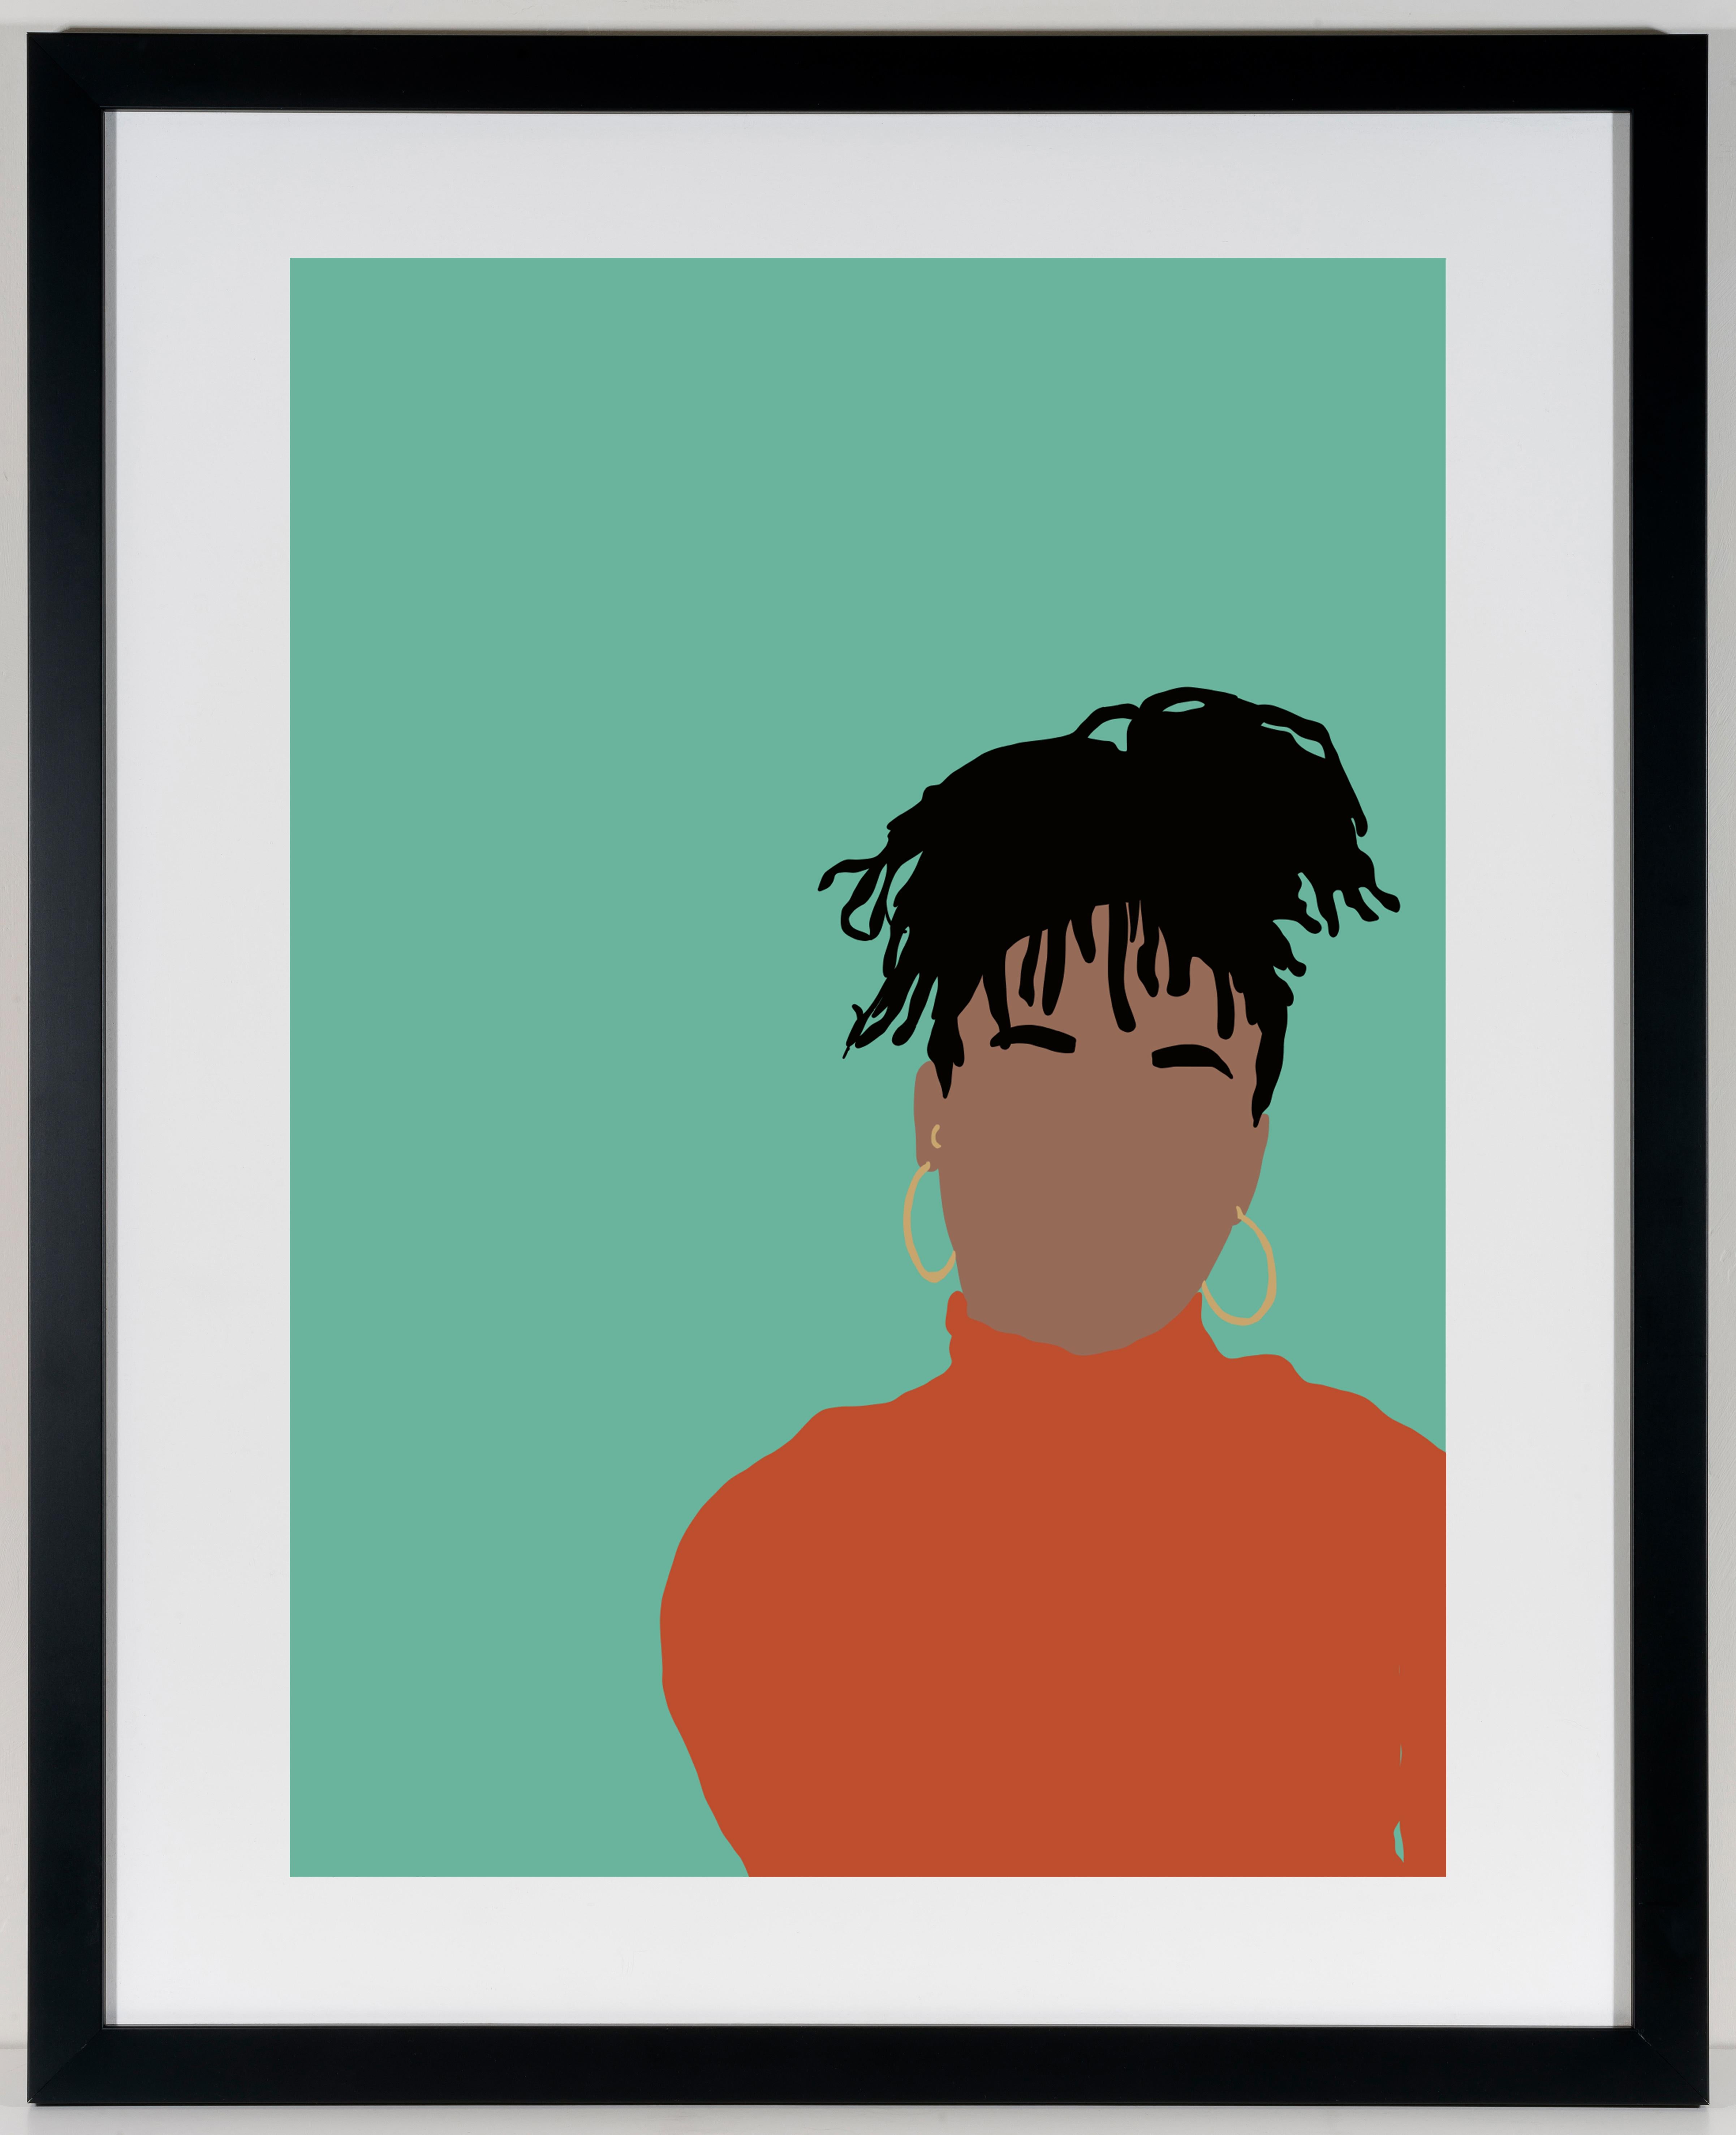 Real - Digital Illustration Black/Brown Figure w/ Dreadlocks Teal + Orange Frame - Print by Samantha Viotty